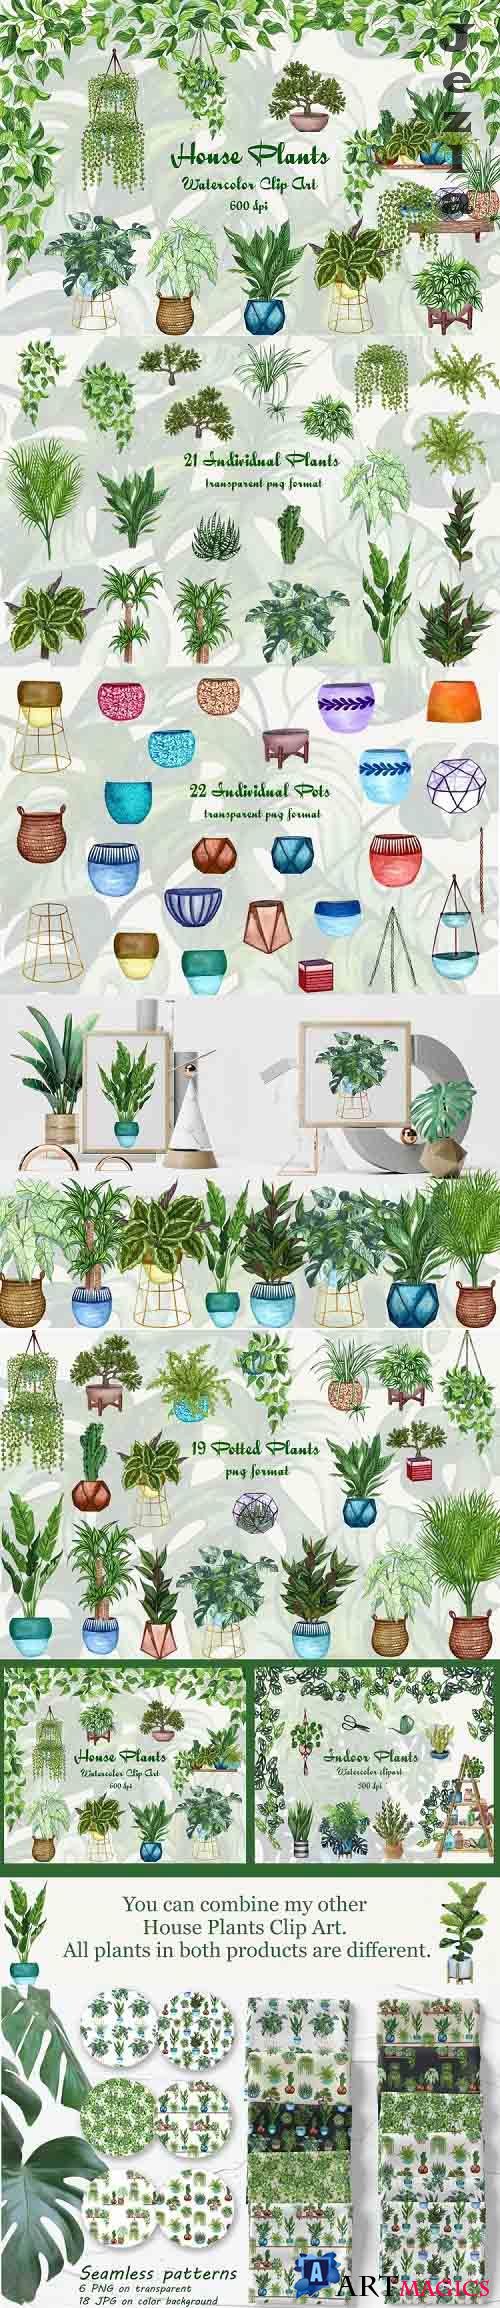 House Plants Watercolor Clip Art 600dpi - 611501